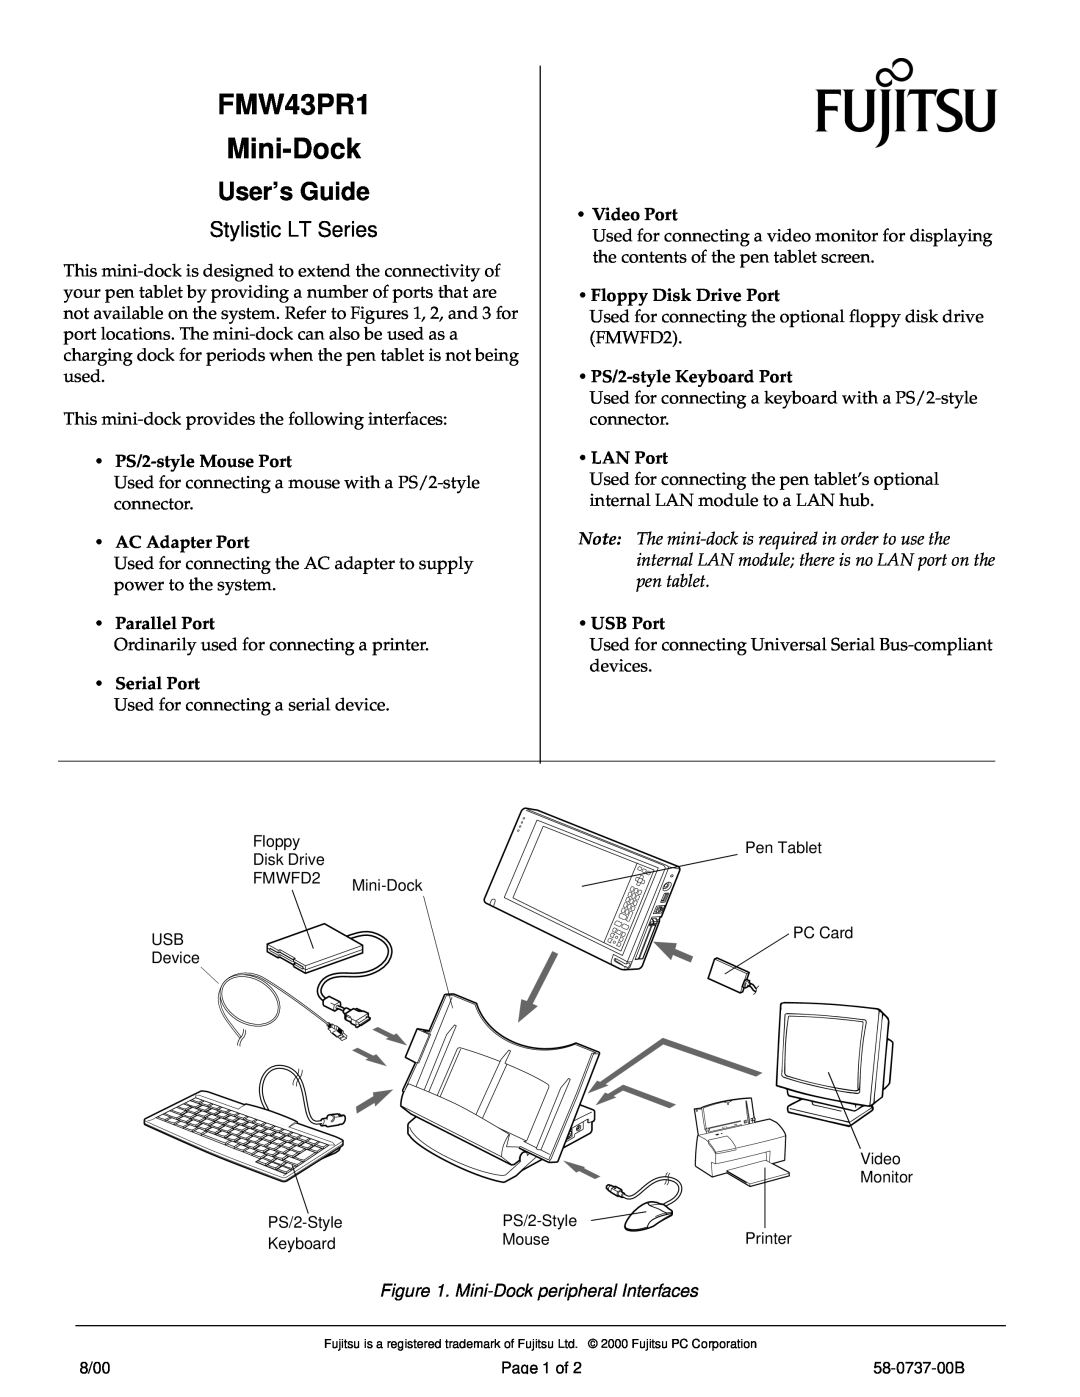 Fujitsu Siemens Computers manual Stylistic LT Series, Mini-Dock peripheral Interfaces, FMW43PR1 Mini-Dock, User’s Guide 